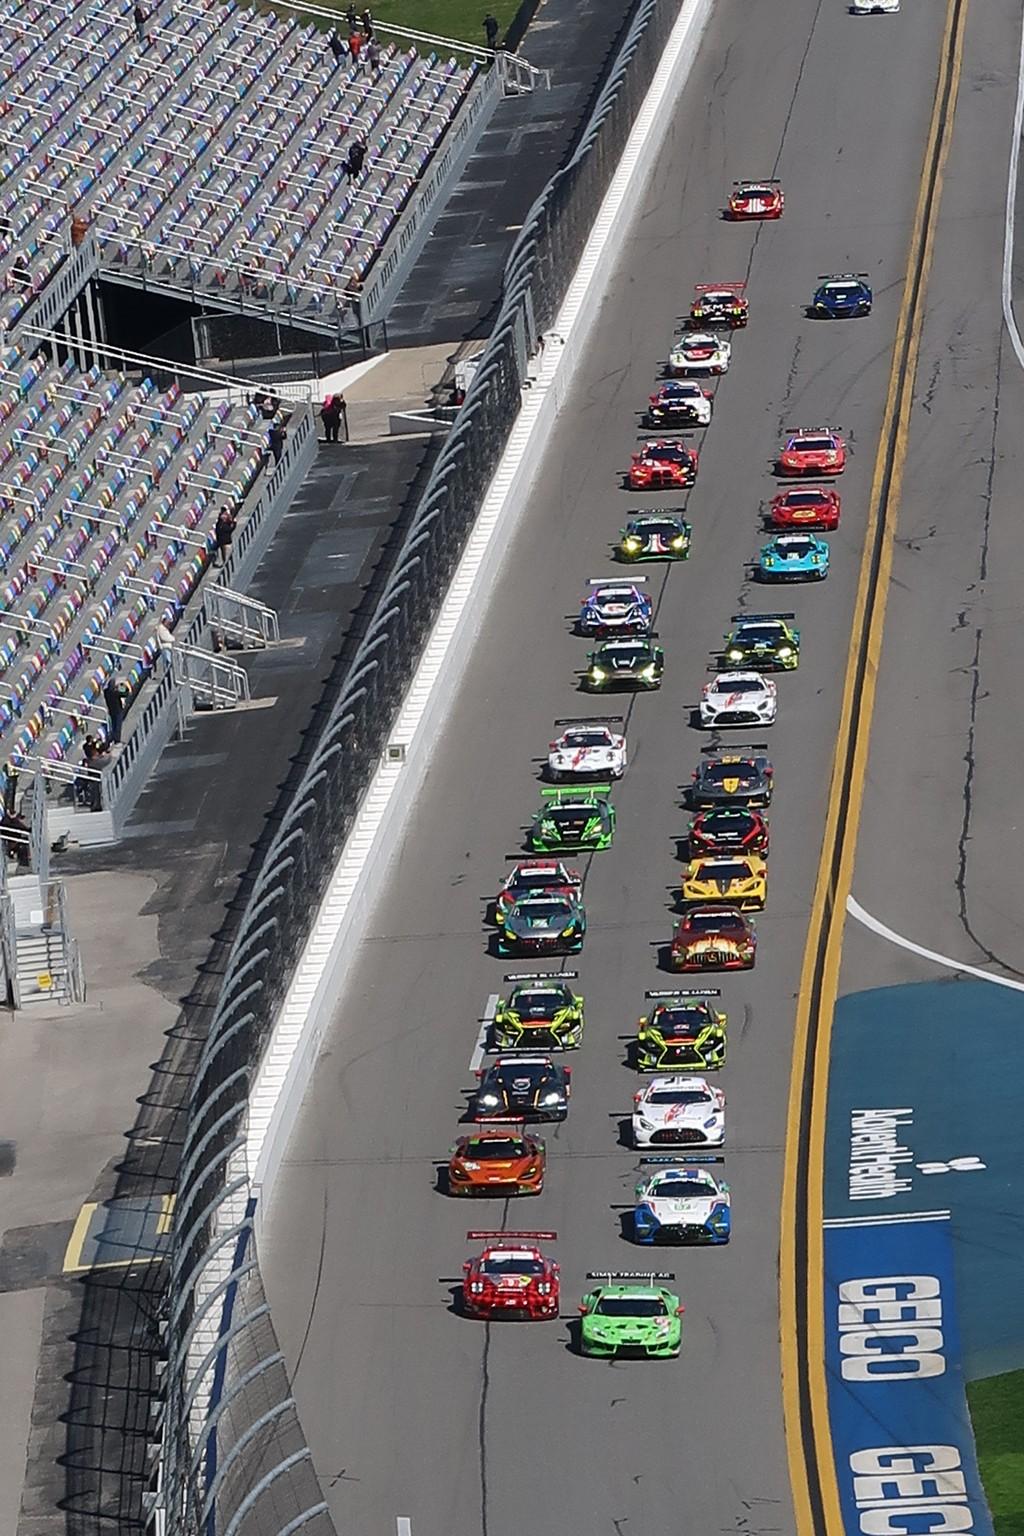 Racecars on the Daytona racetrack